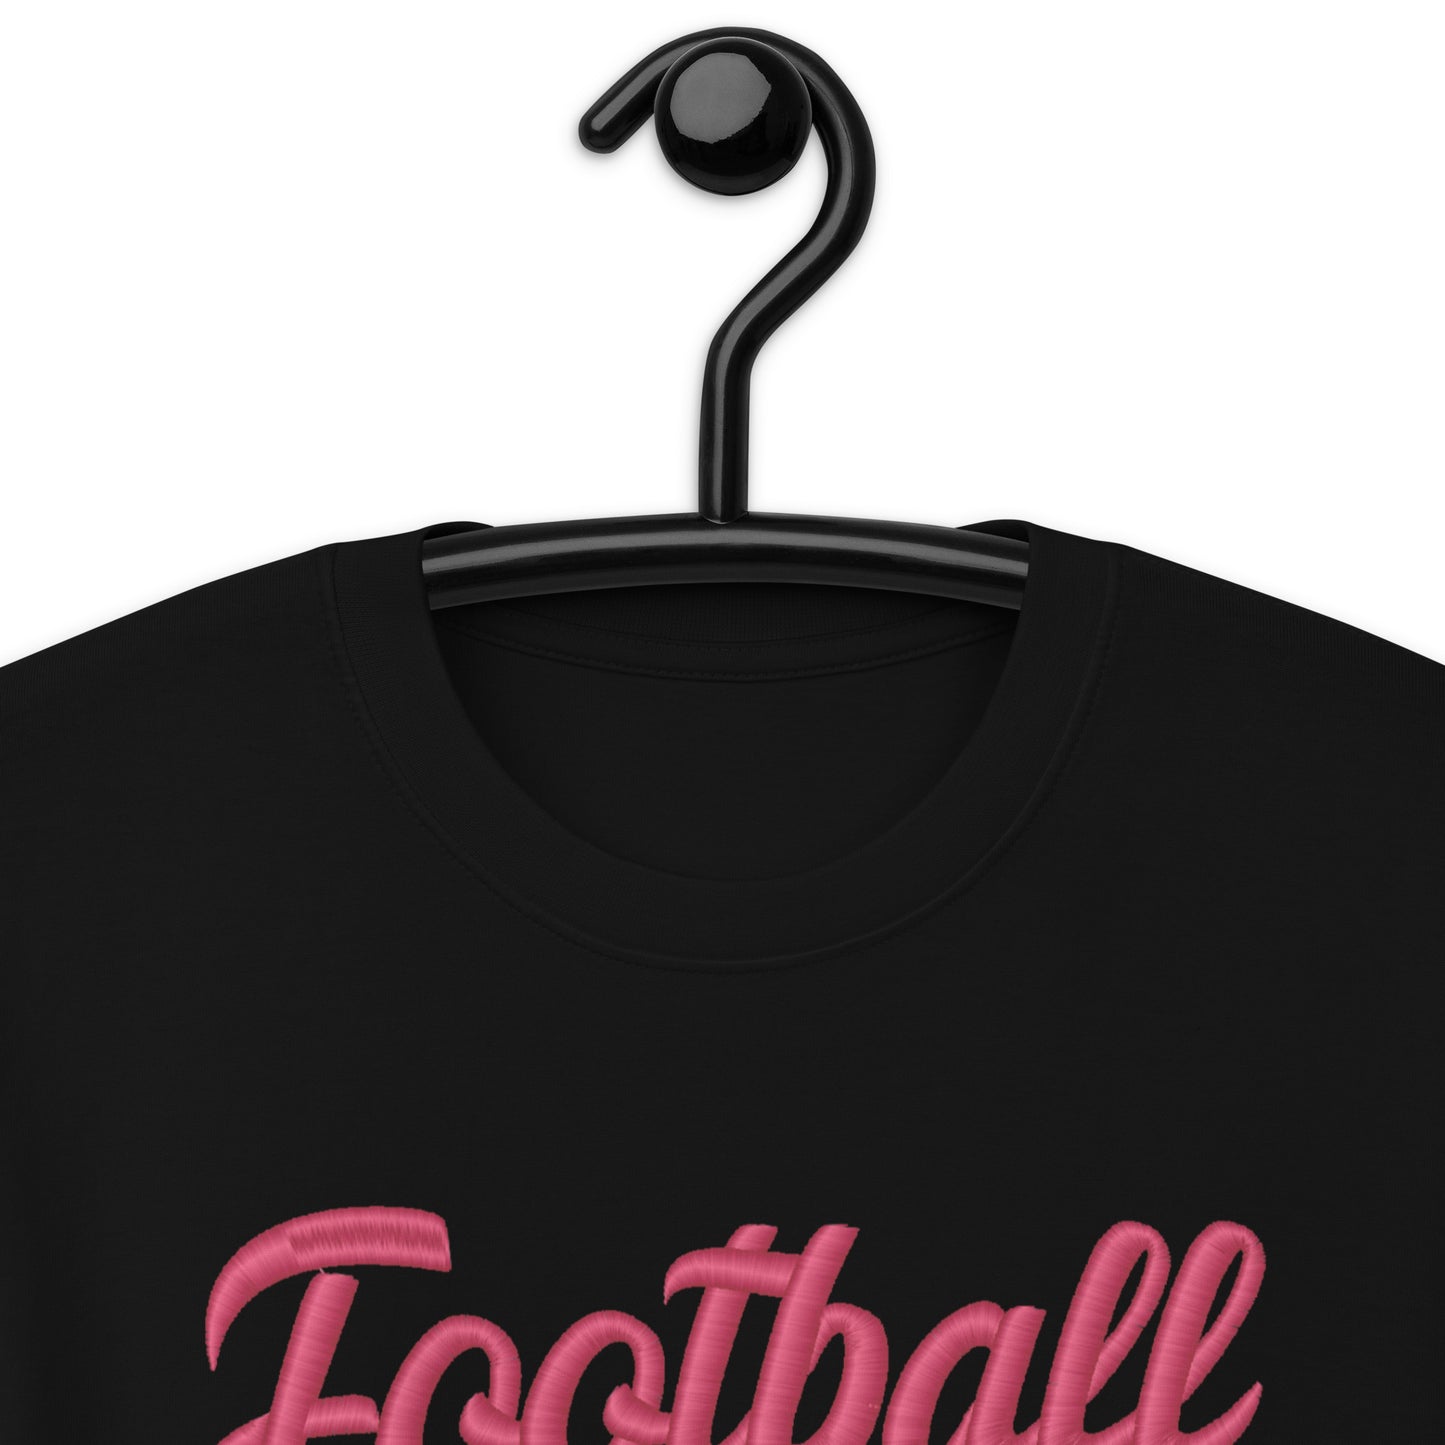 Football Tee GILDAN T-Shirt - Magandato